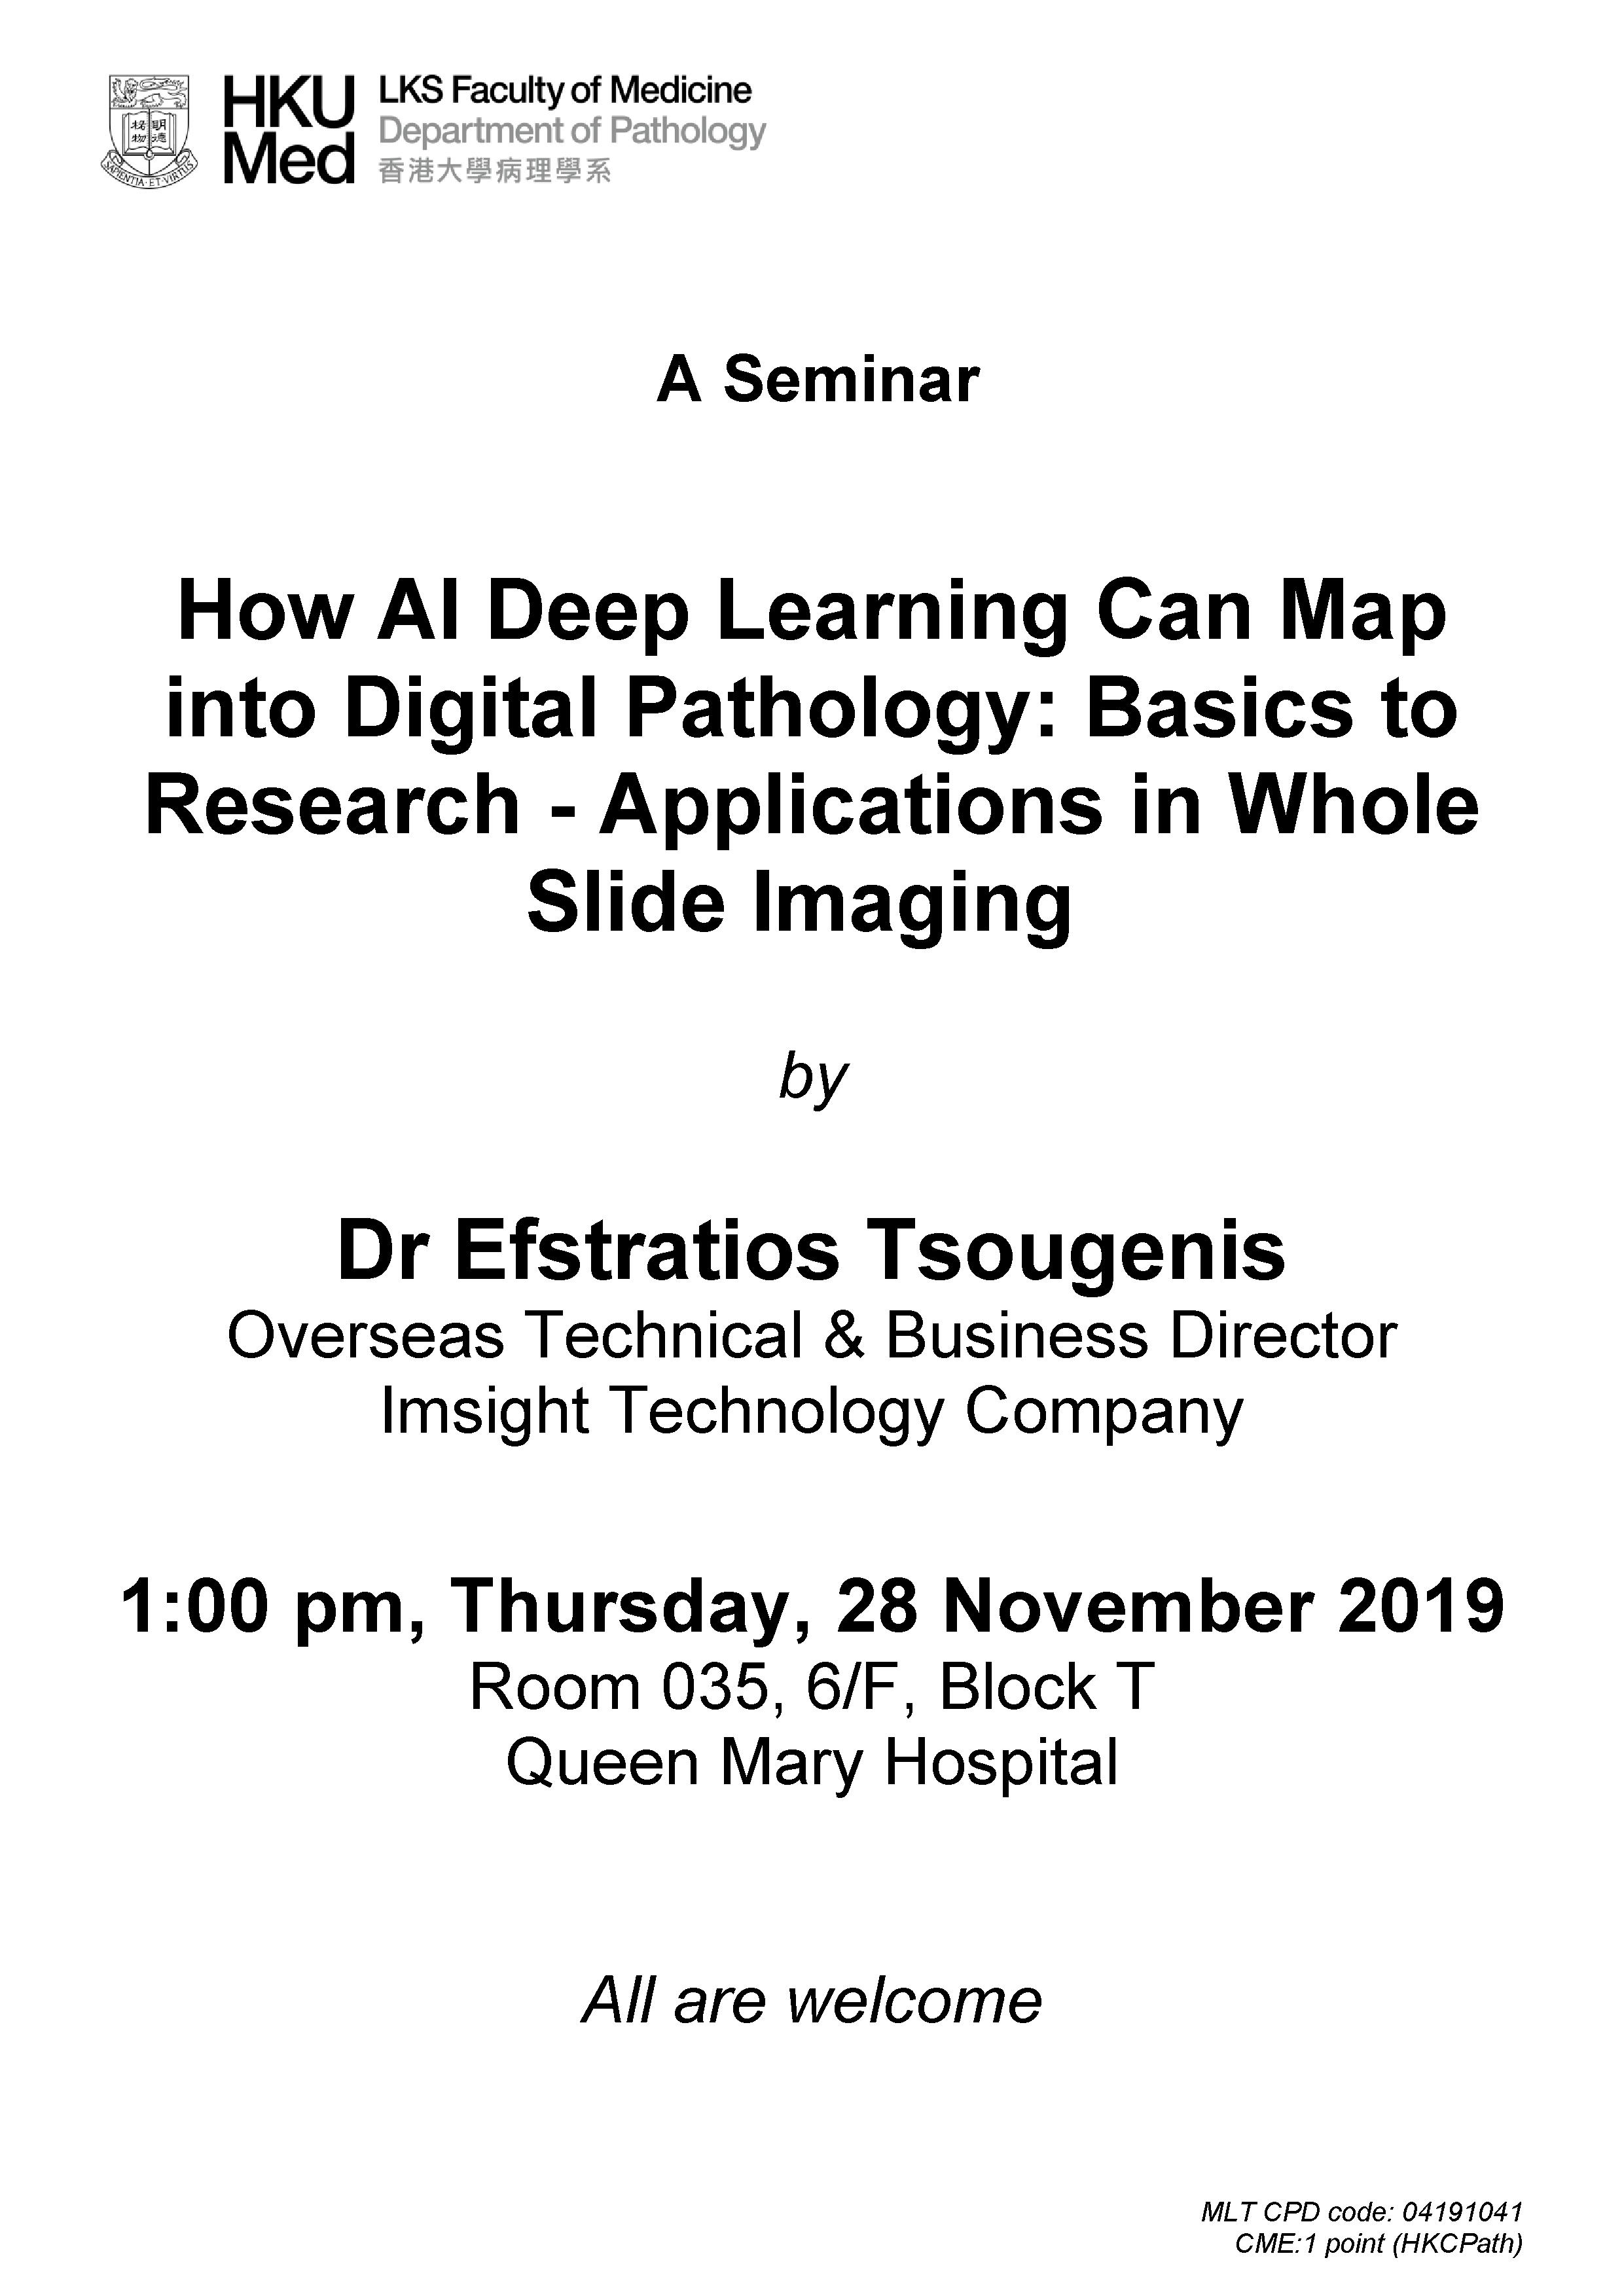 A seminar by Dr Efstratios Tsougenis on 28 Nov (1 pm)